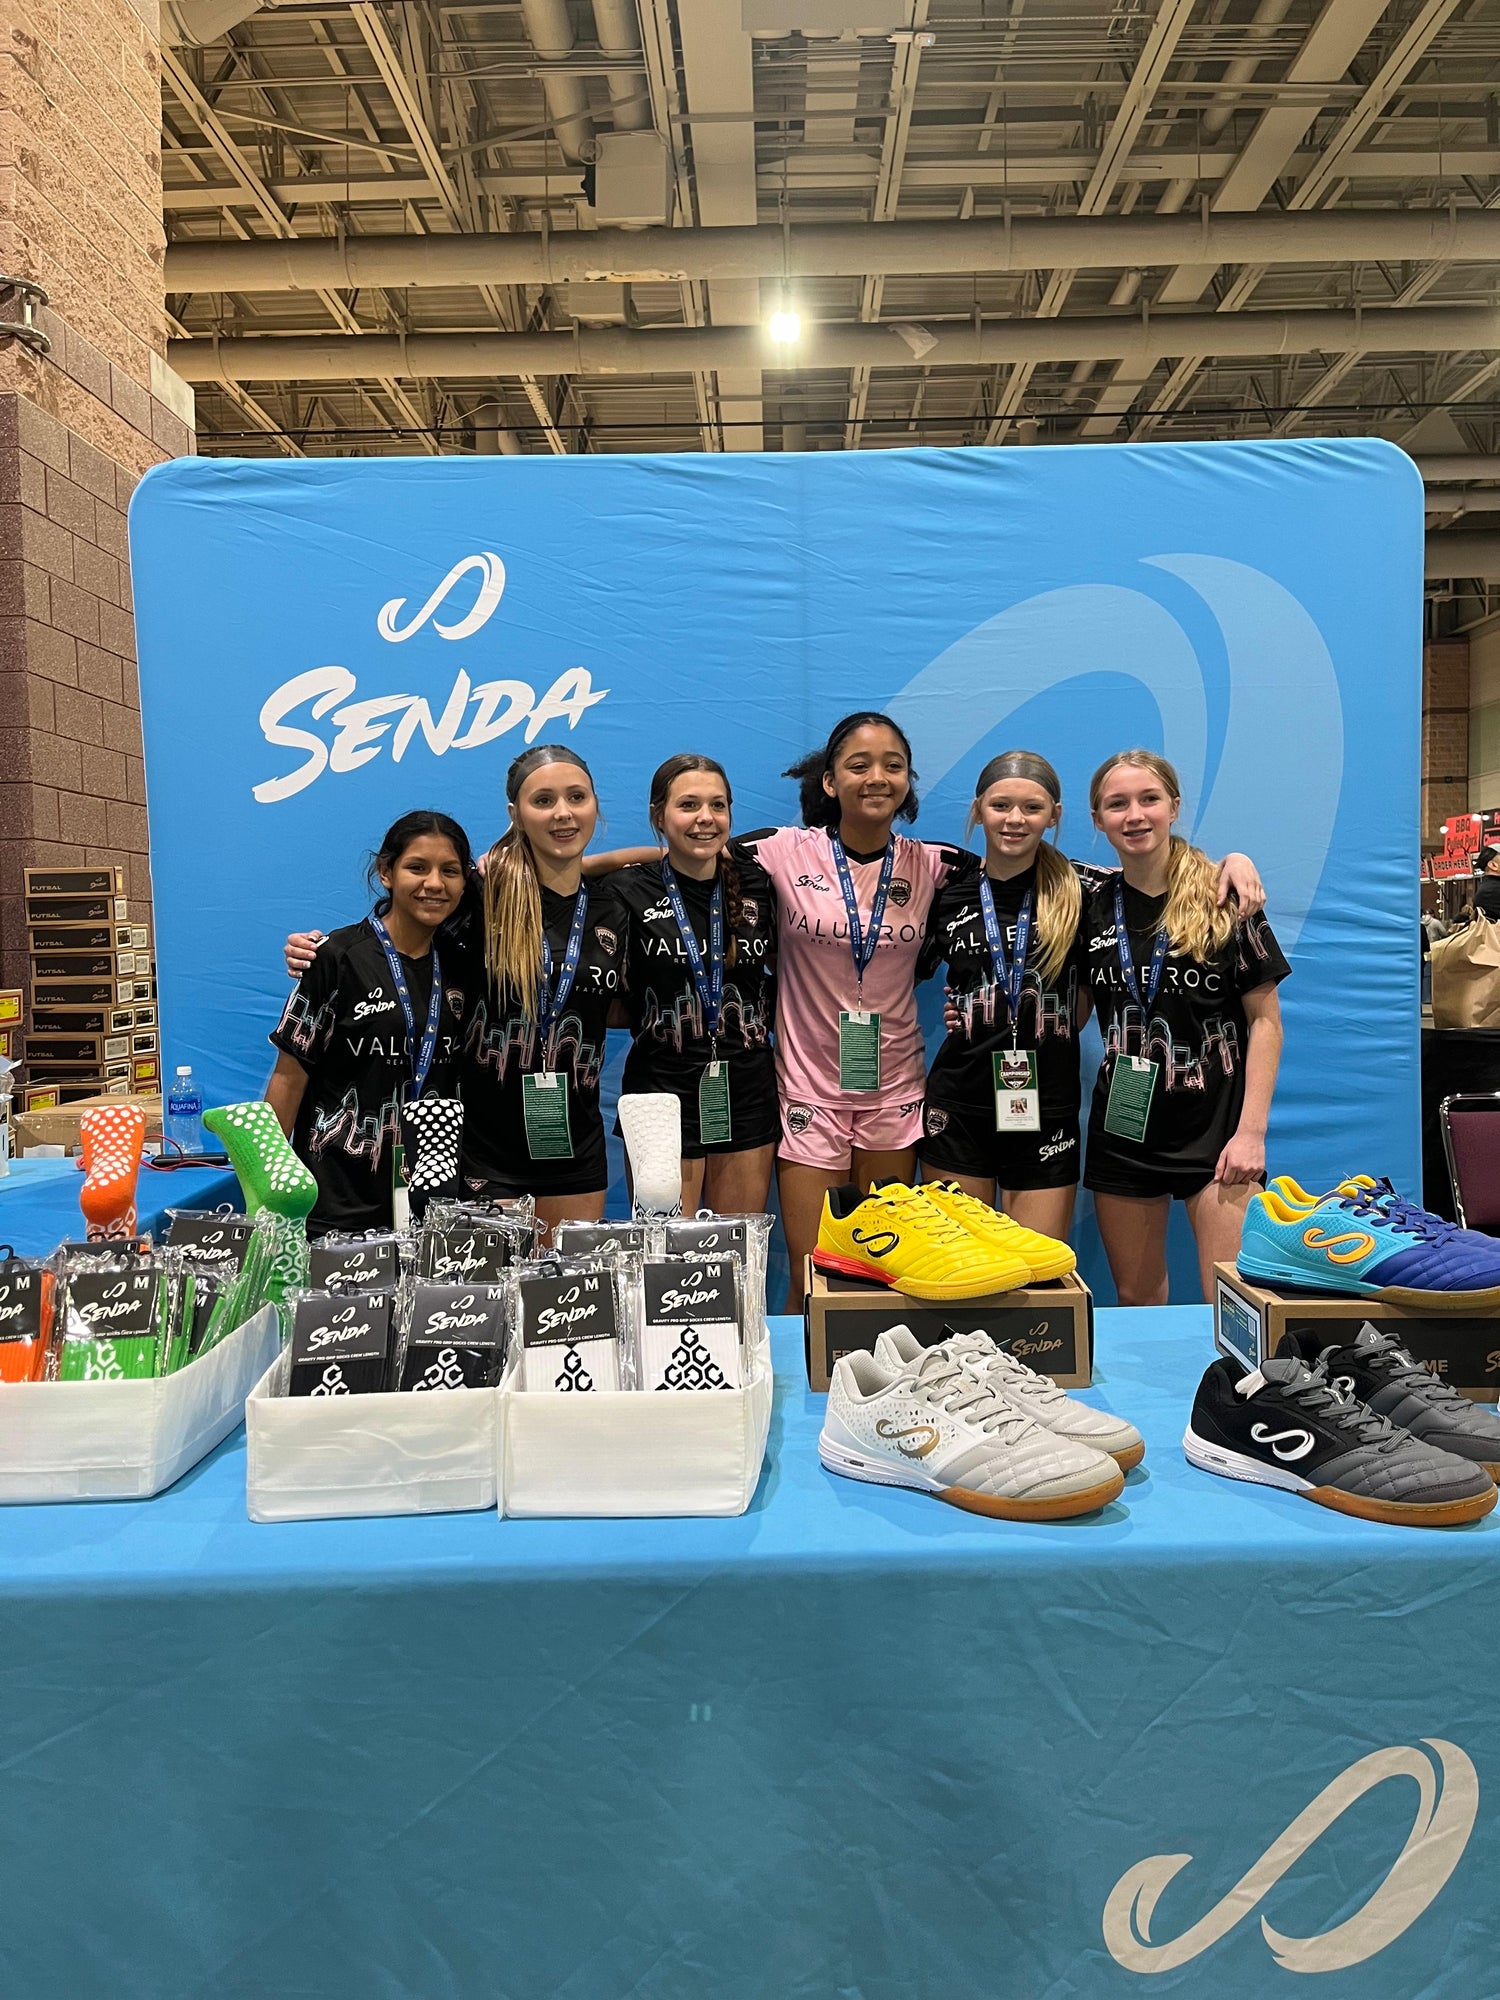 US Futsal - Senda's Booth